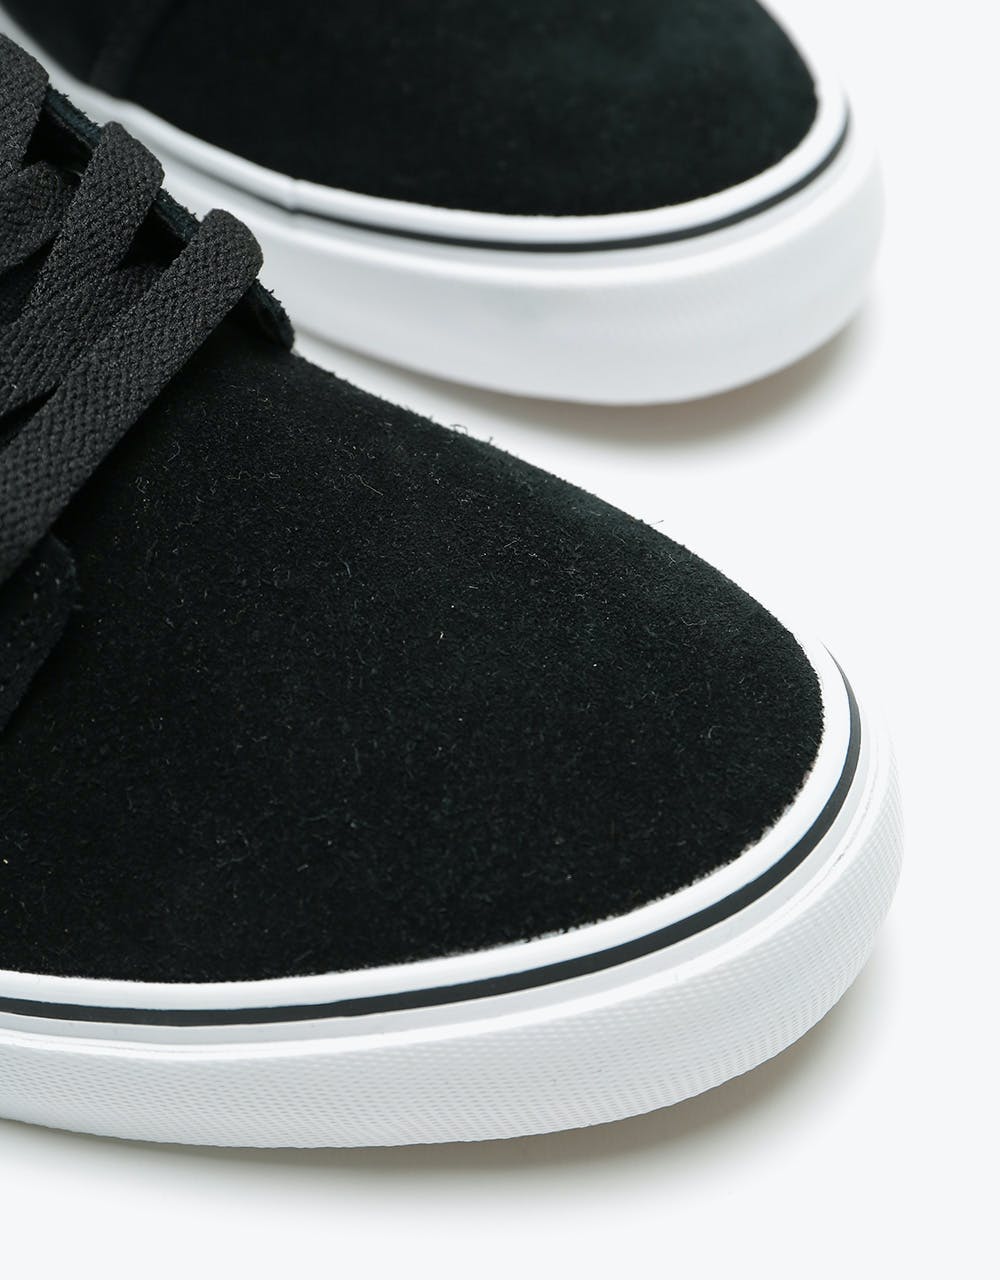 Etnies Barge LS Skate Shoes - Black/White/Black